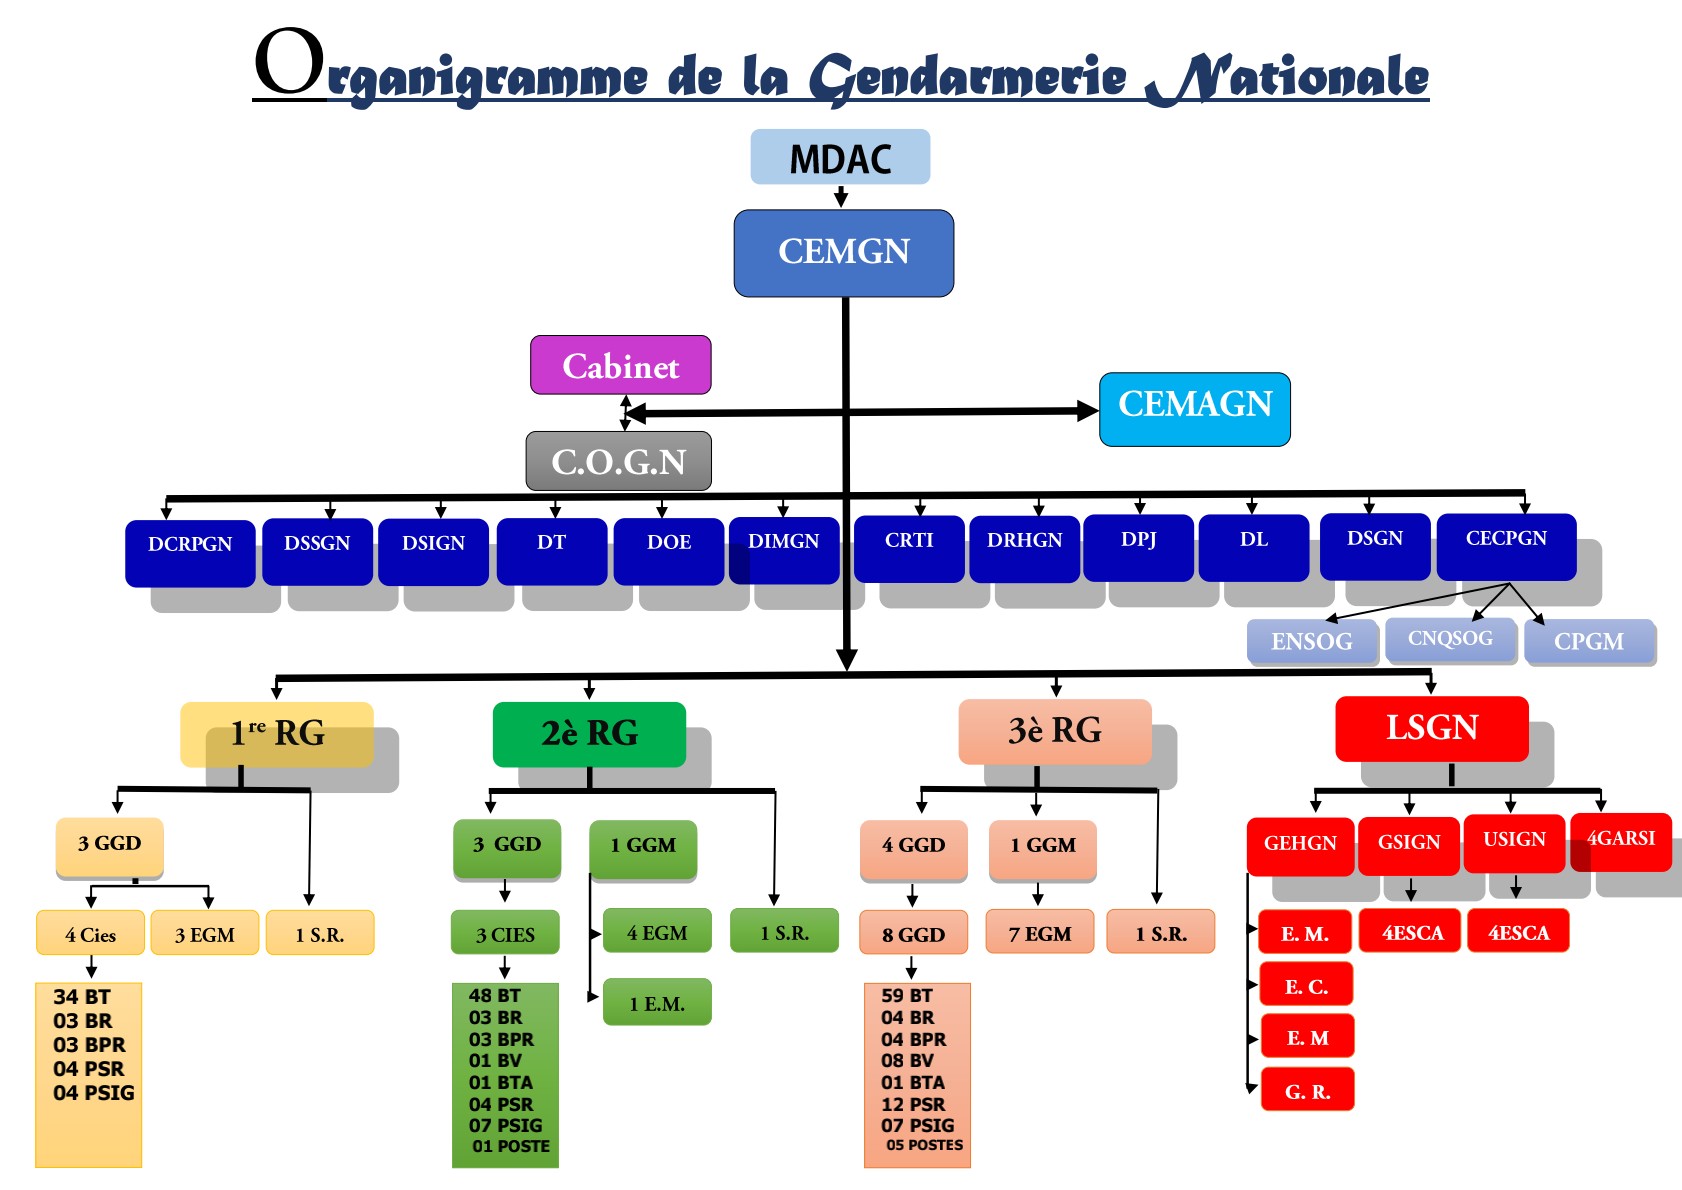 Organigramme de la Gendarmerie Nationale du Burkina Faso